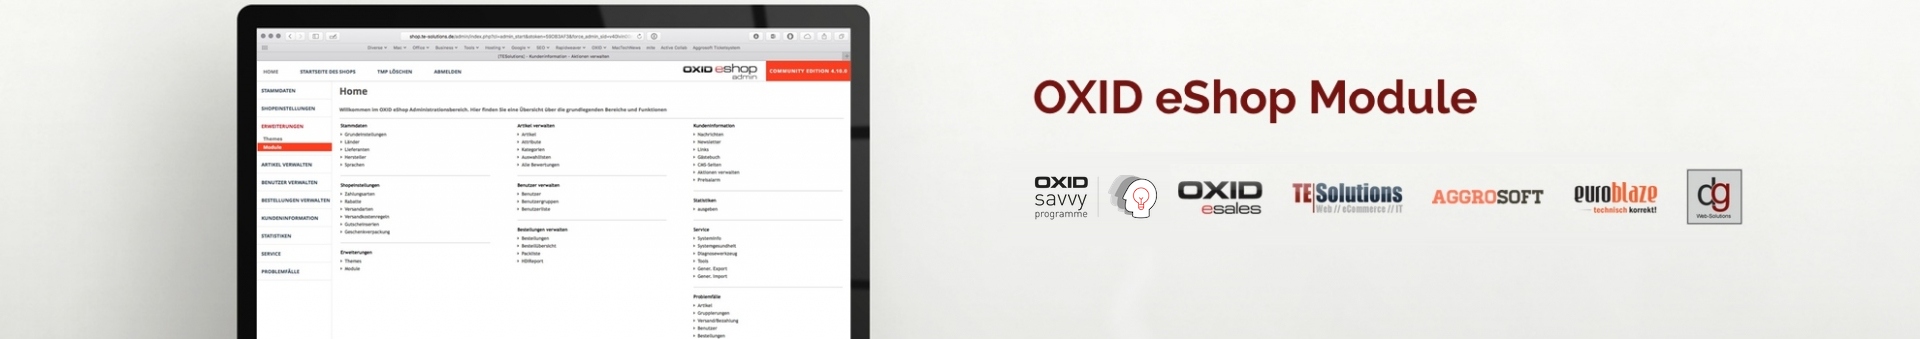 OXID eShop Module